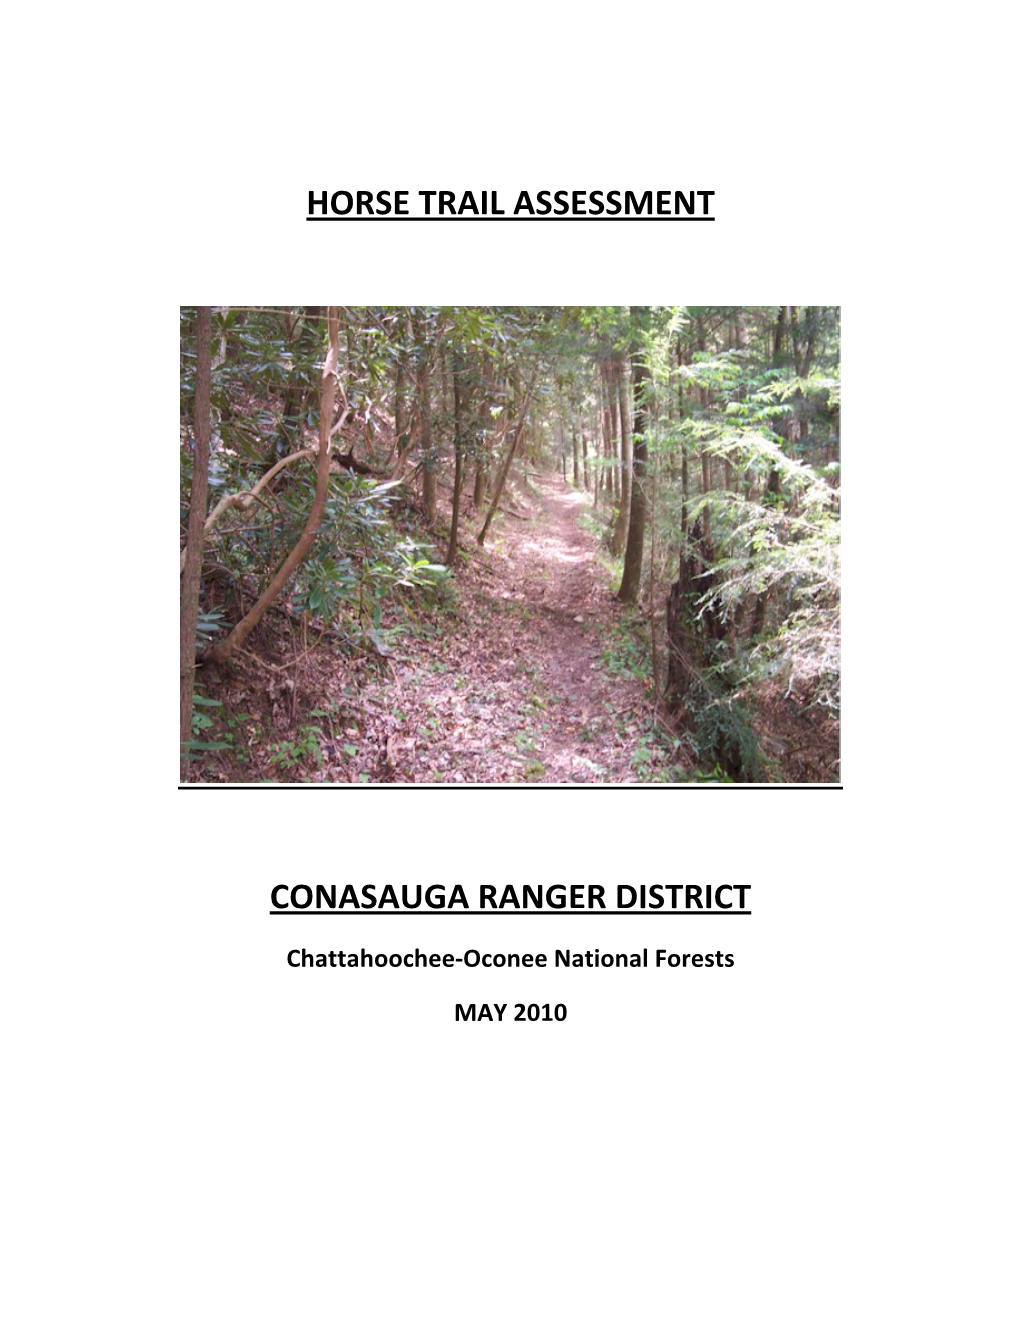 Horse Trail Assessment Conasauga Ranger District